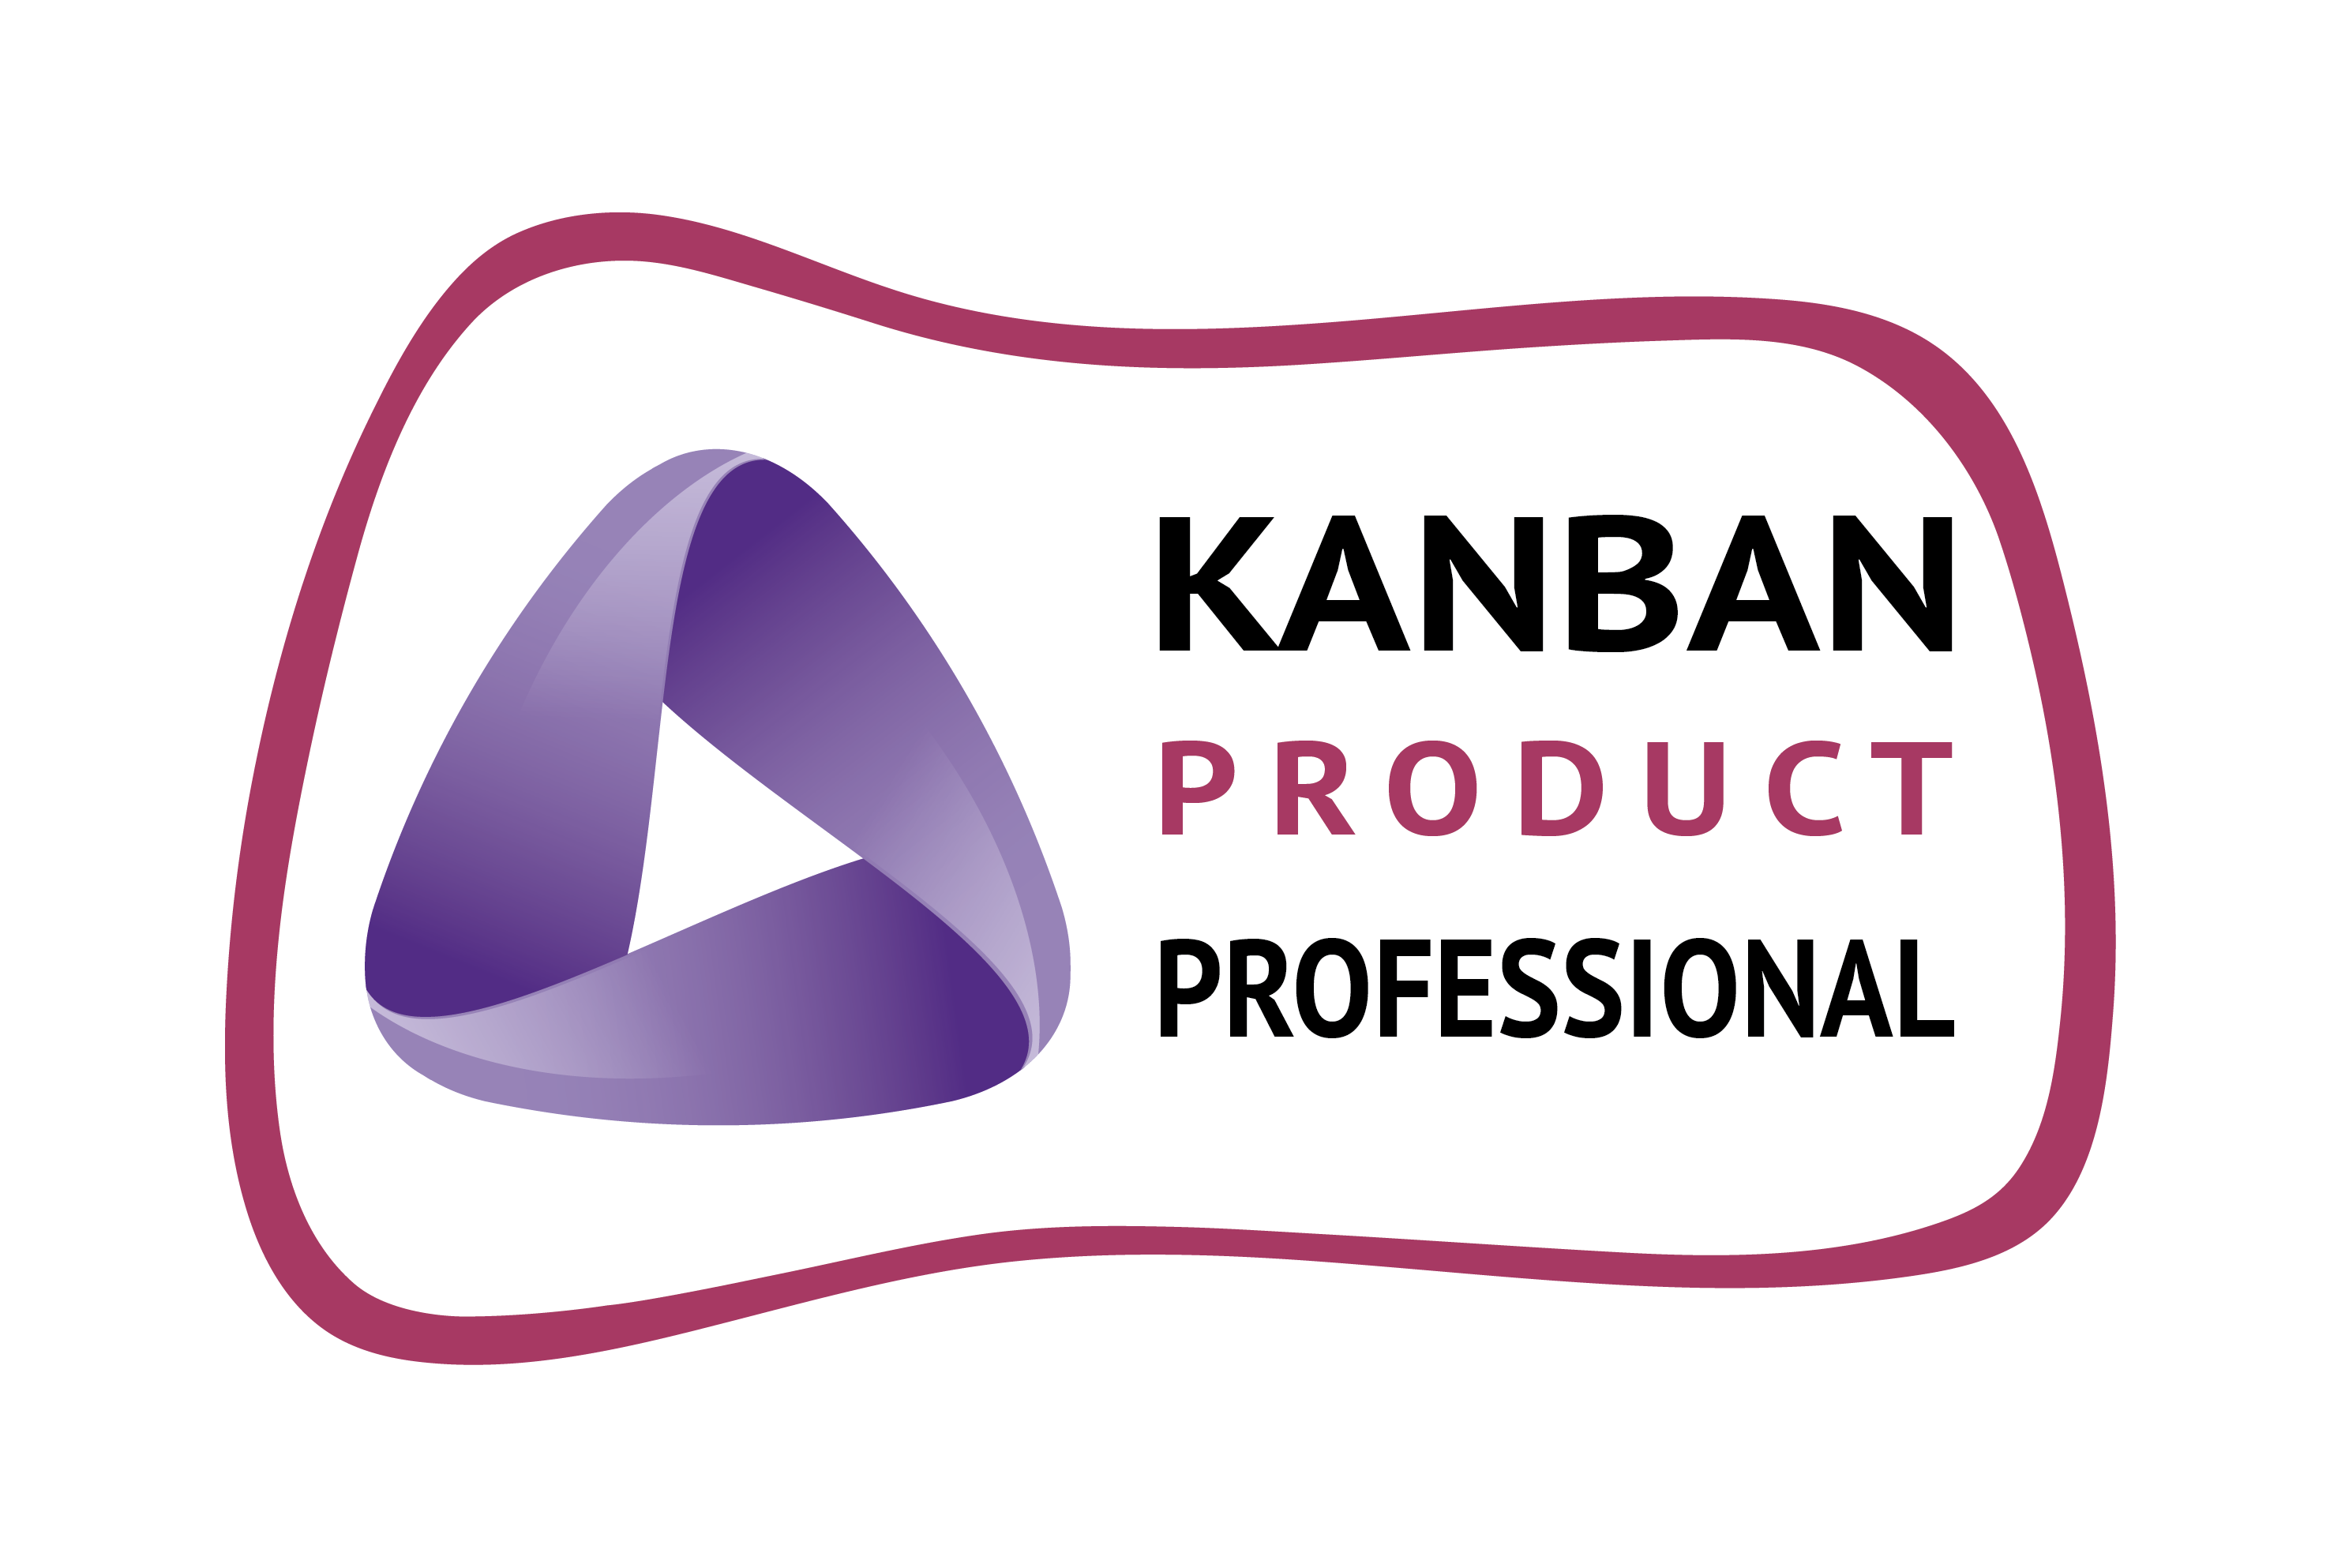 Kanban Product Professional